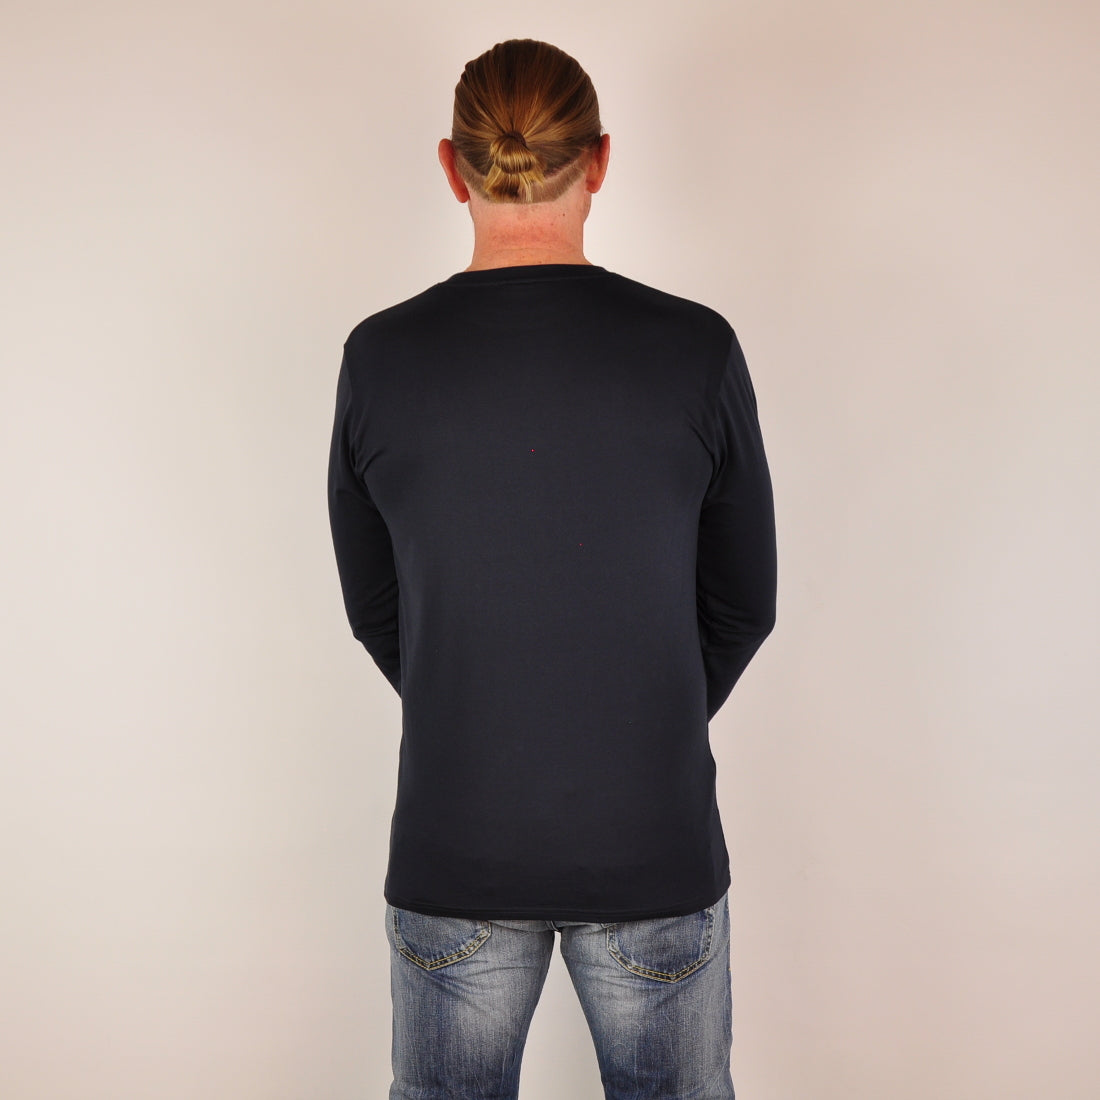 MEDITERRAN Men №5 | Langarm T-Shirt